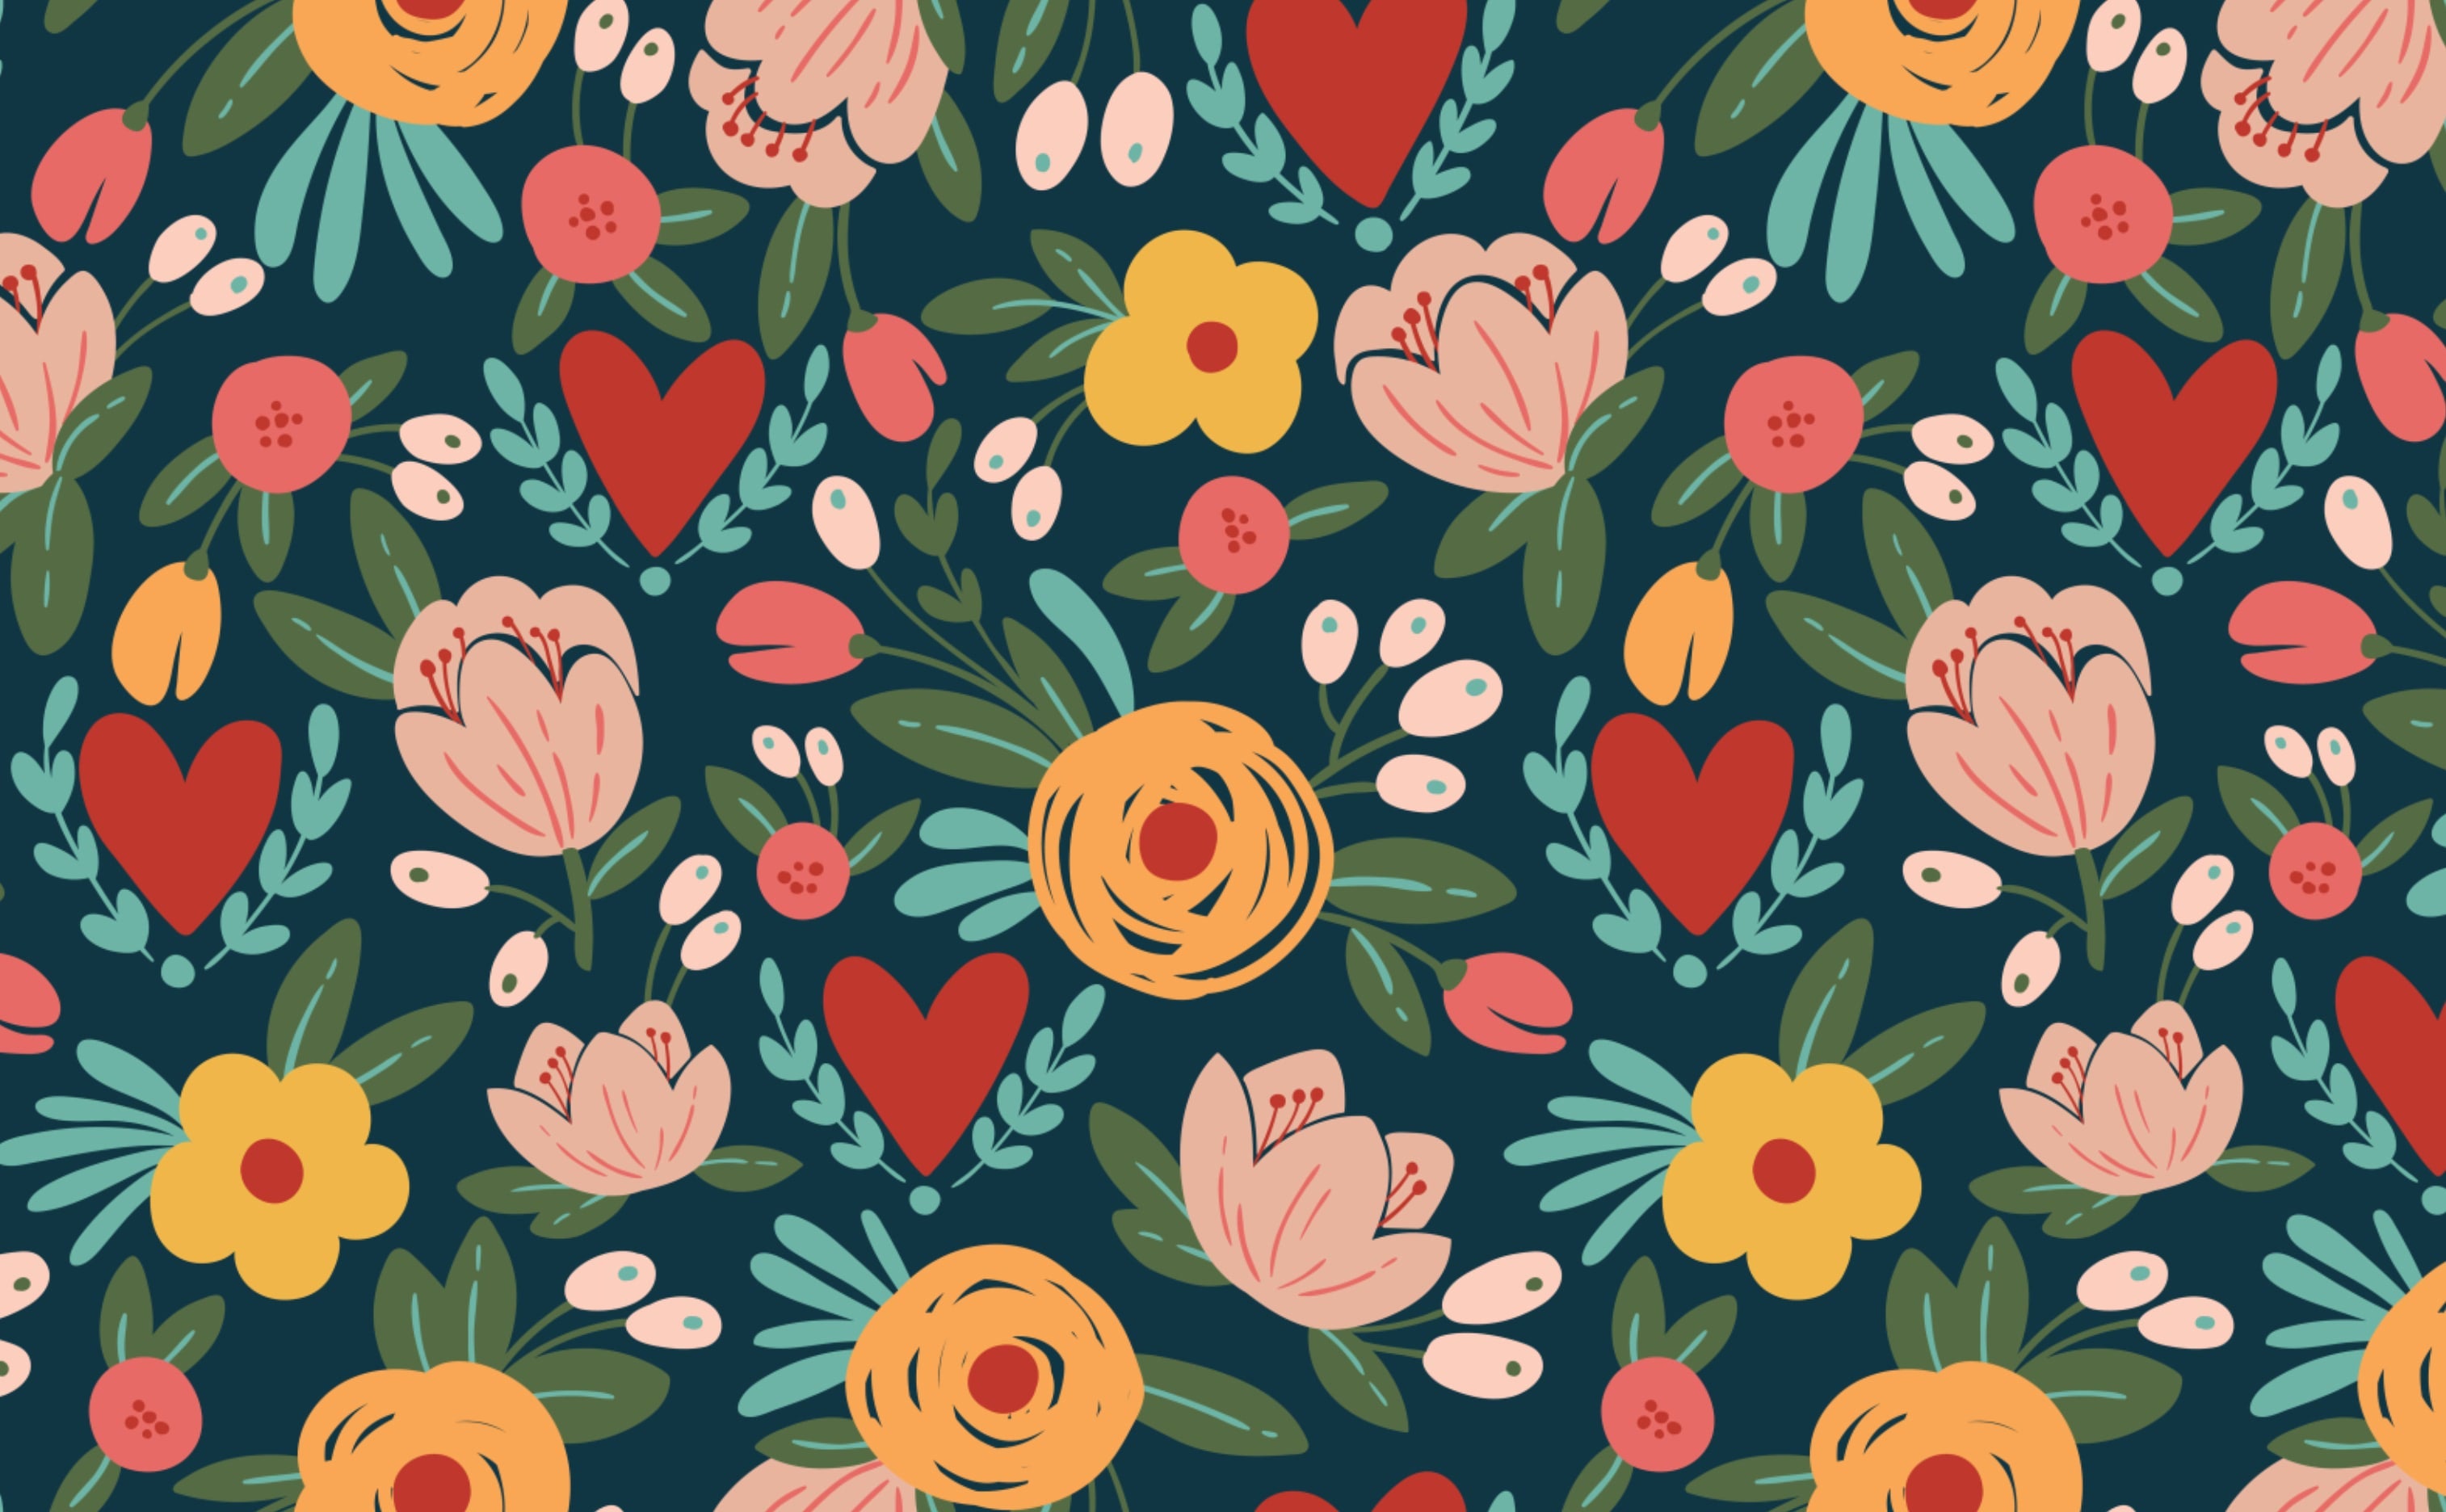 Bright Floral Design Wallpaper for Walls